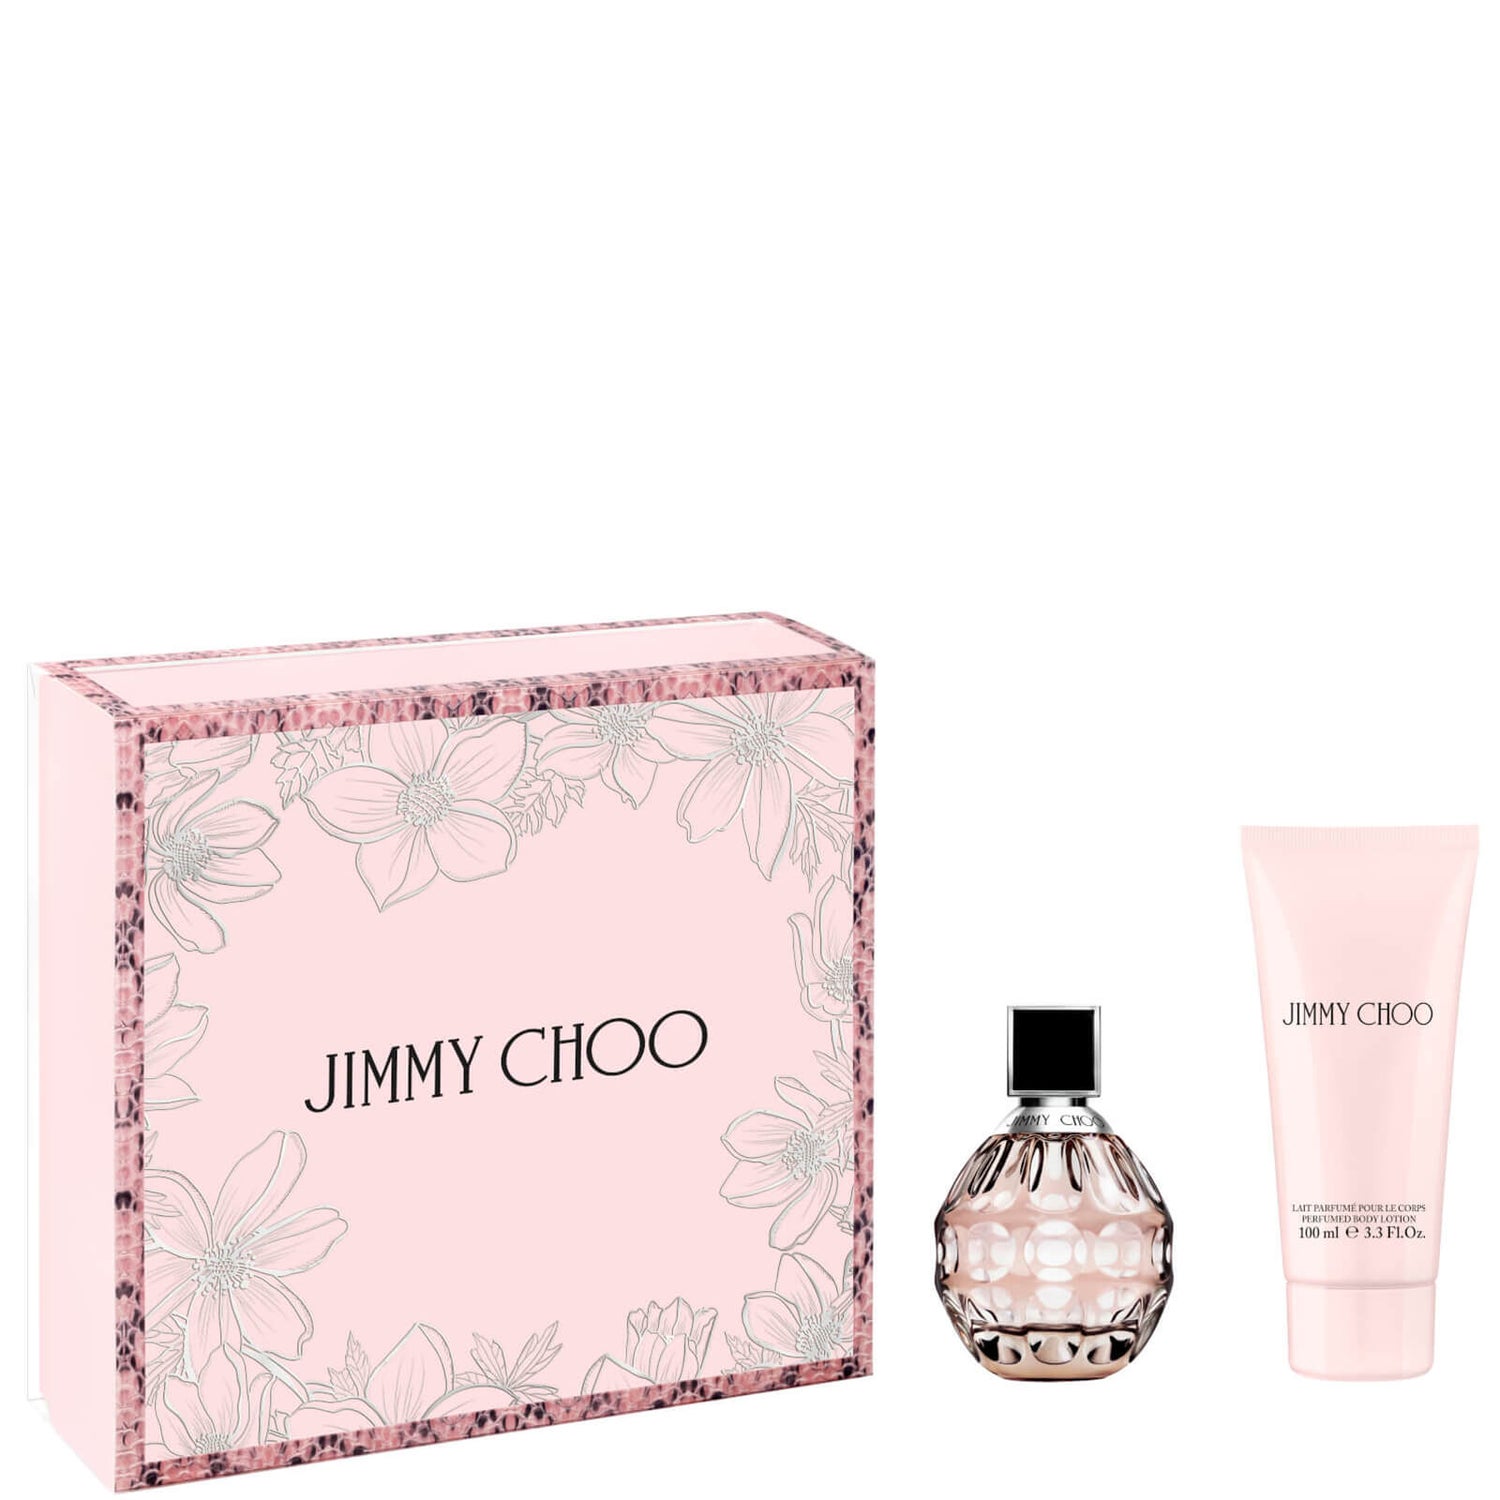 Jimmy Choo Eau de Parfum and Body Lotion Set (Worth £75.00)